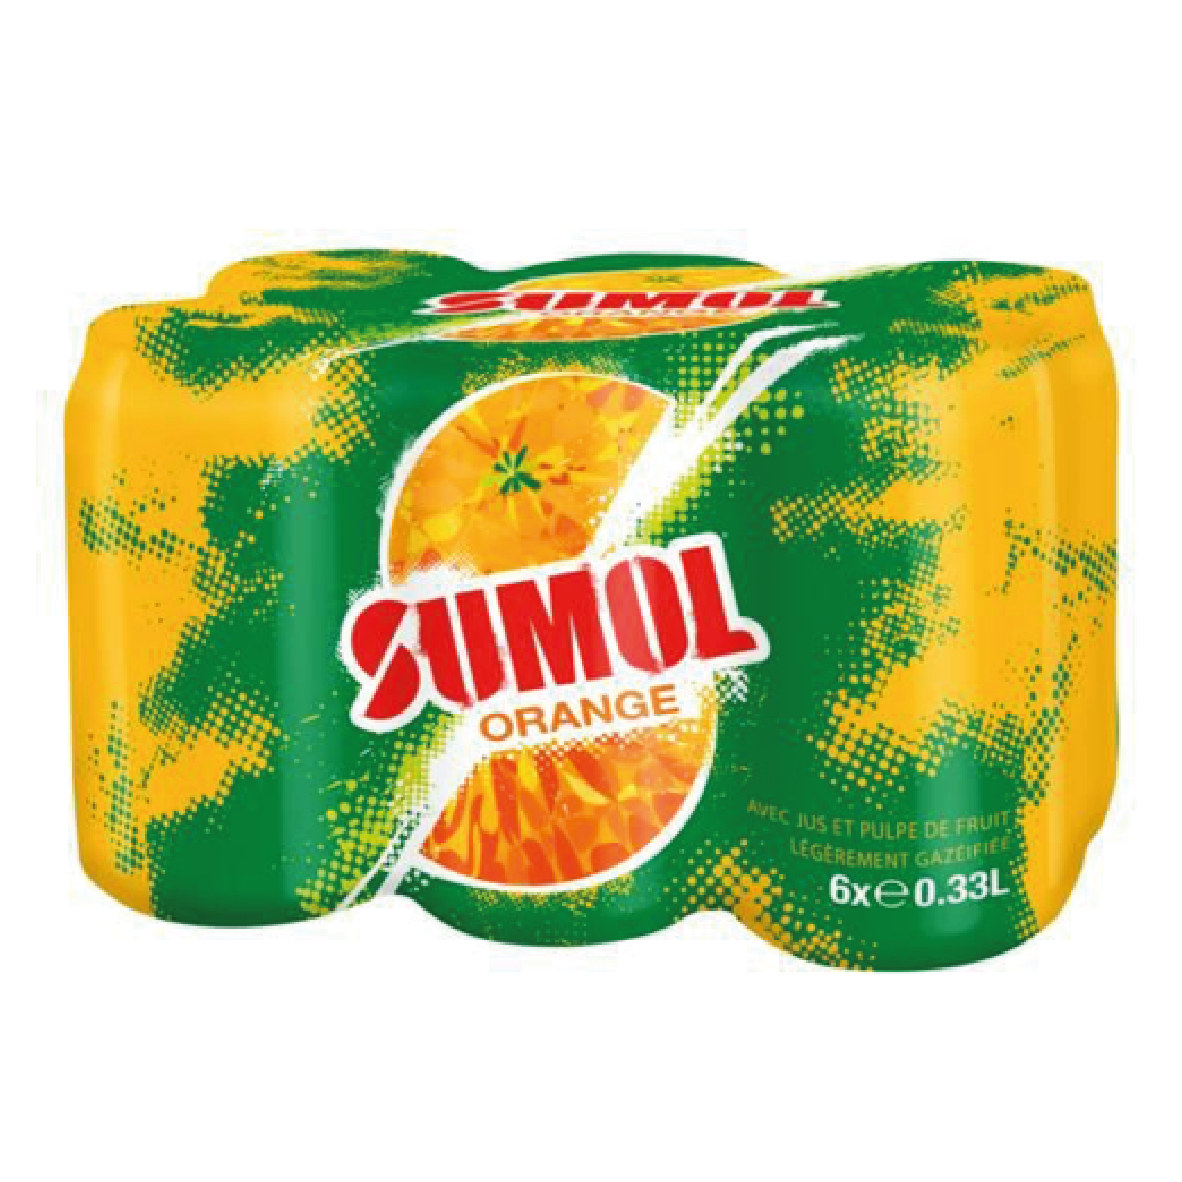 Sumol Orange 6 x 330ml